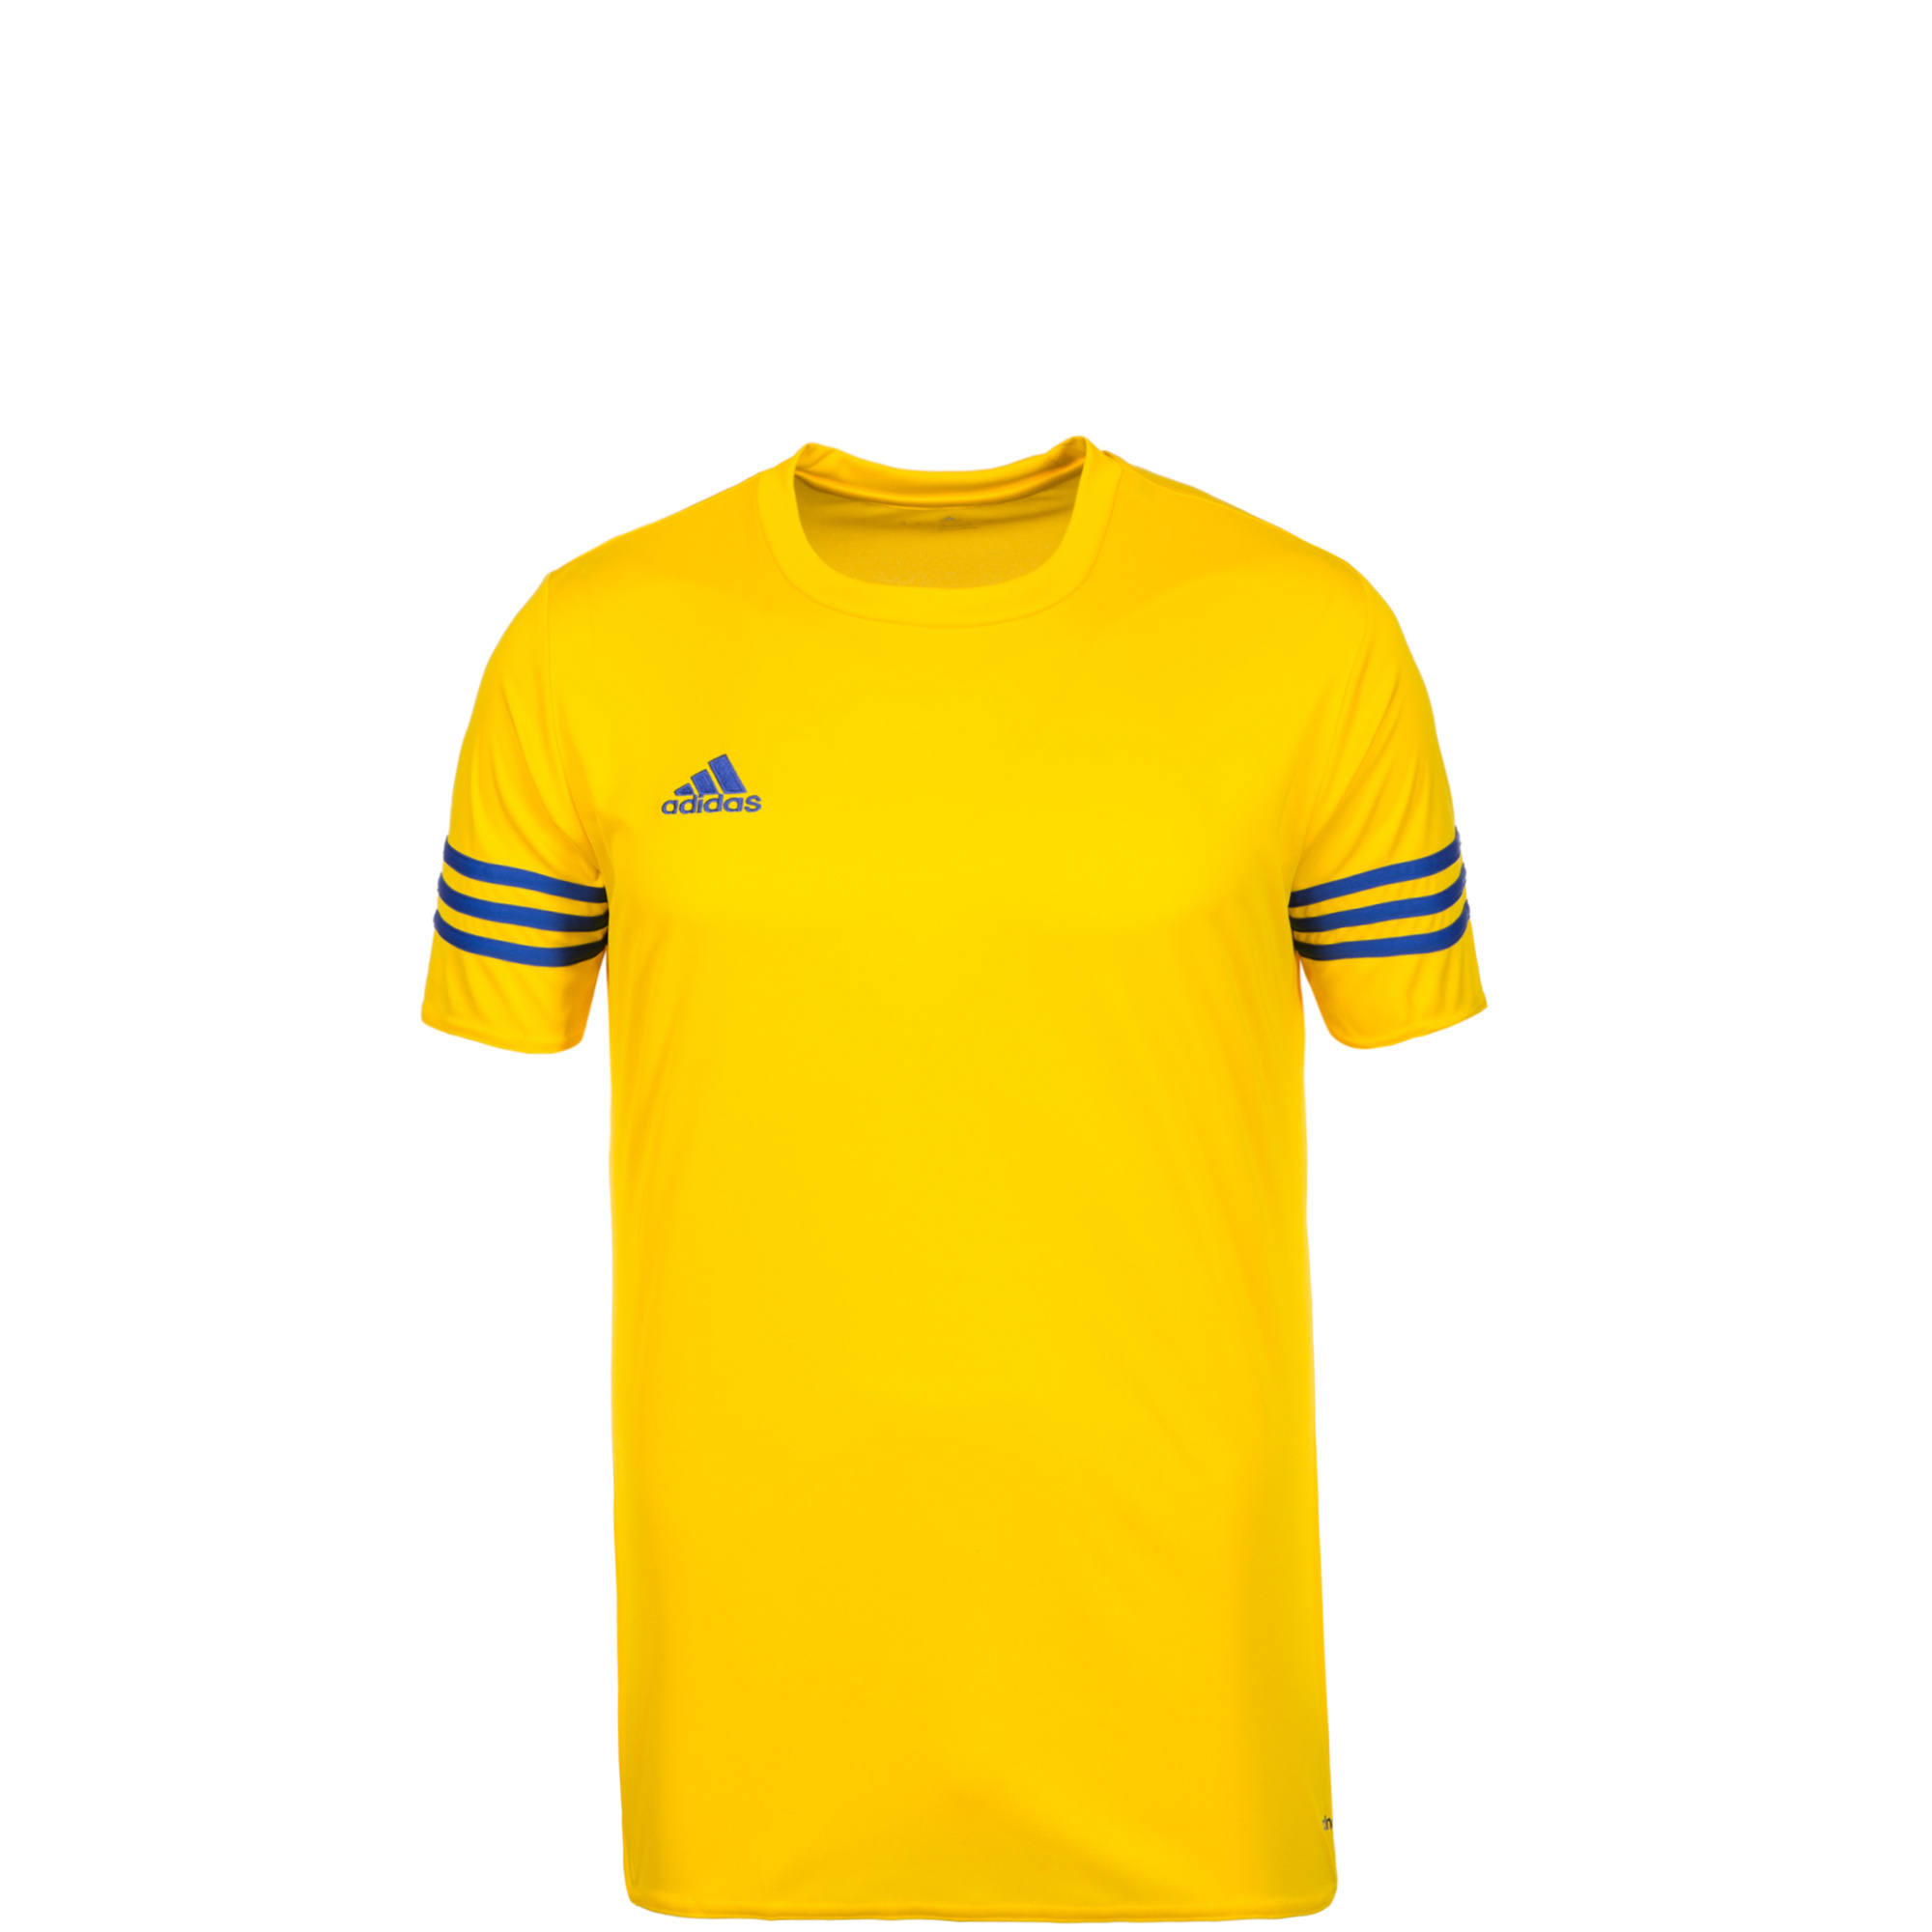 adidas entrada 14 jersey yellow